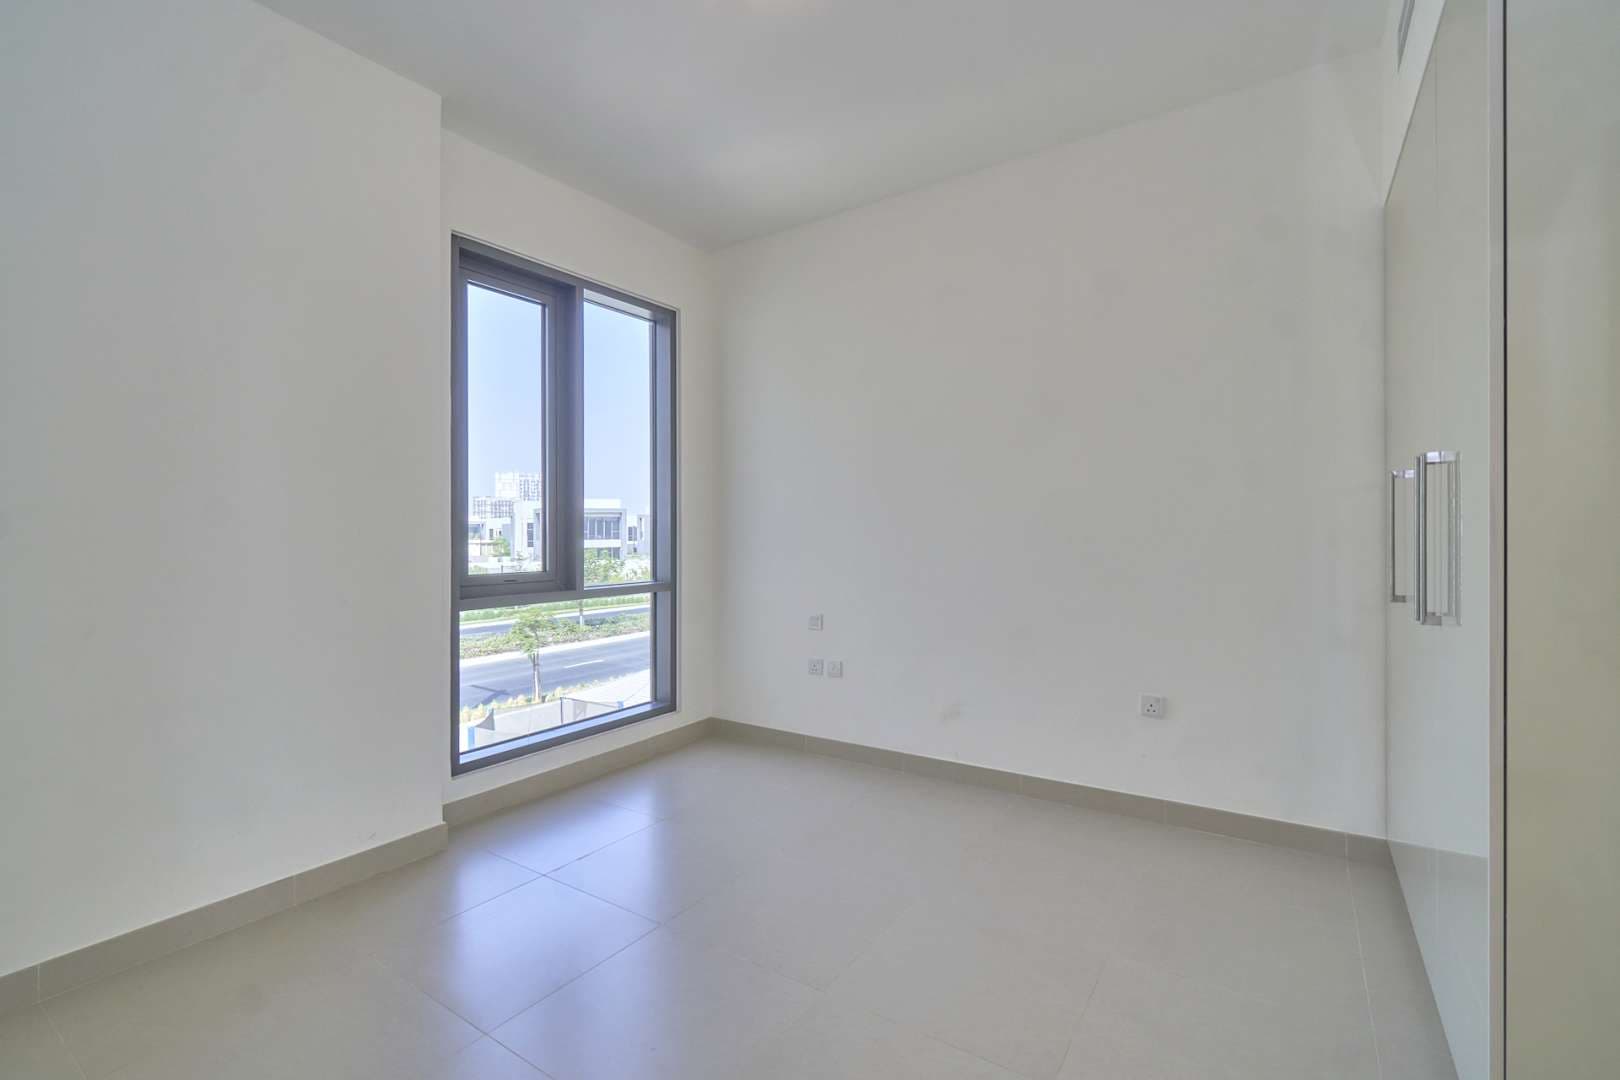 4 Bedroom Townhouse For Sale Maple At Dubai Hills Estate Lp09336 2937c6f7e49b0200.jpg